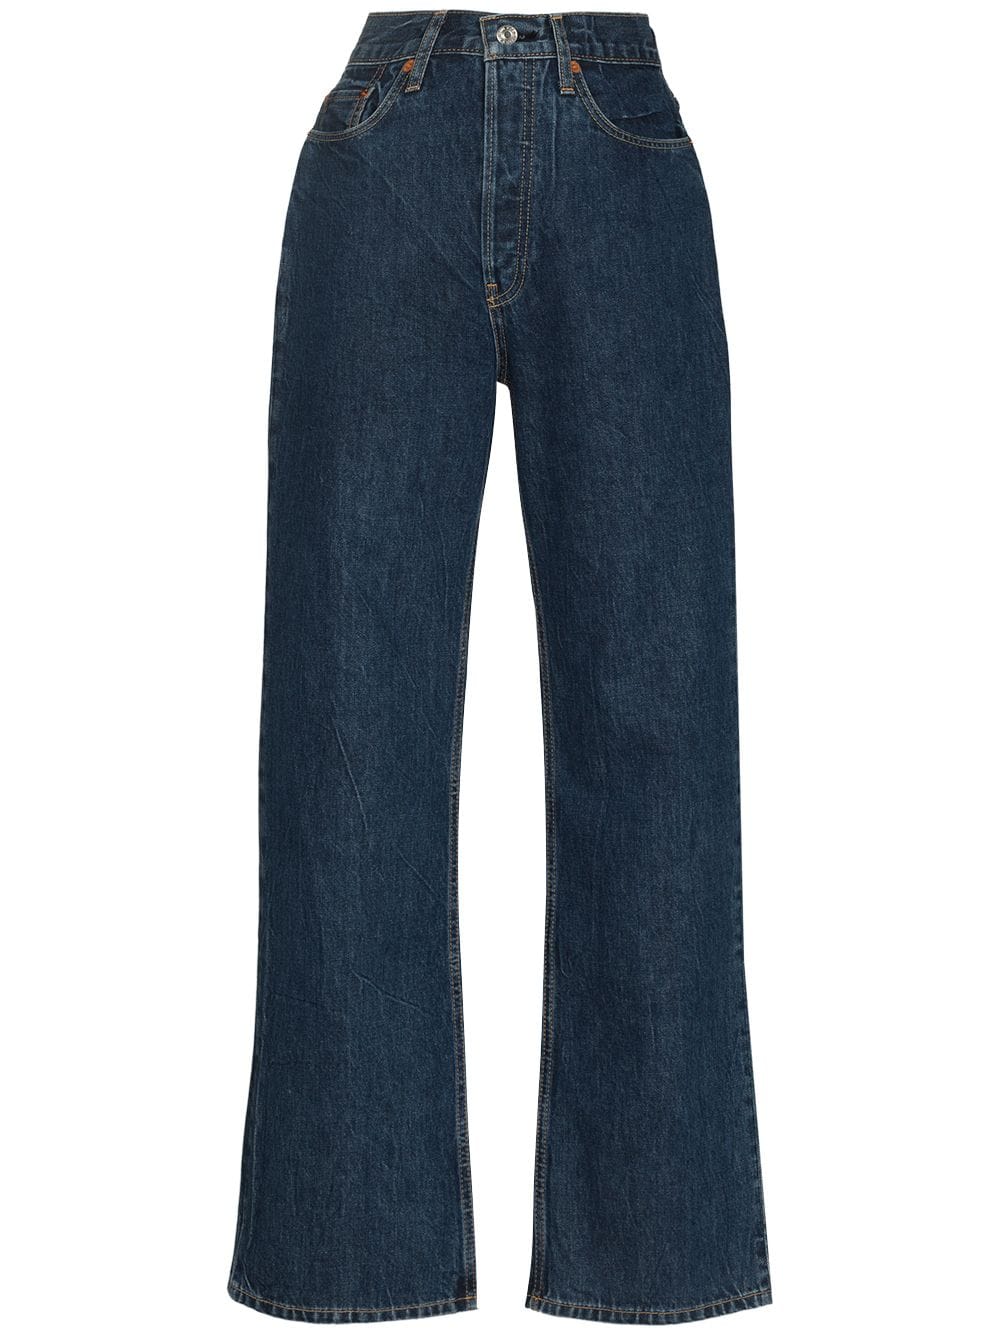 RE/DONE '70s Ultra-high wide-leg Jeans - Farfetch